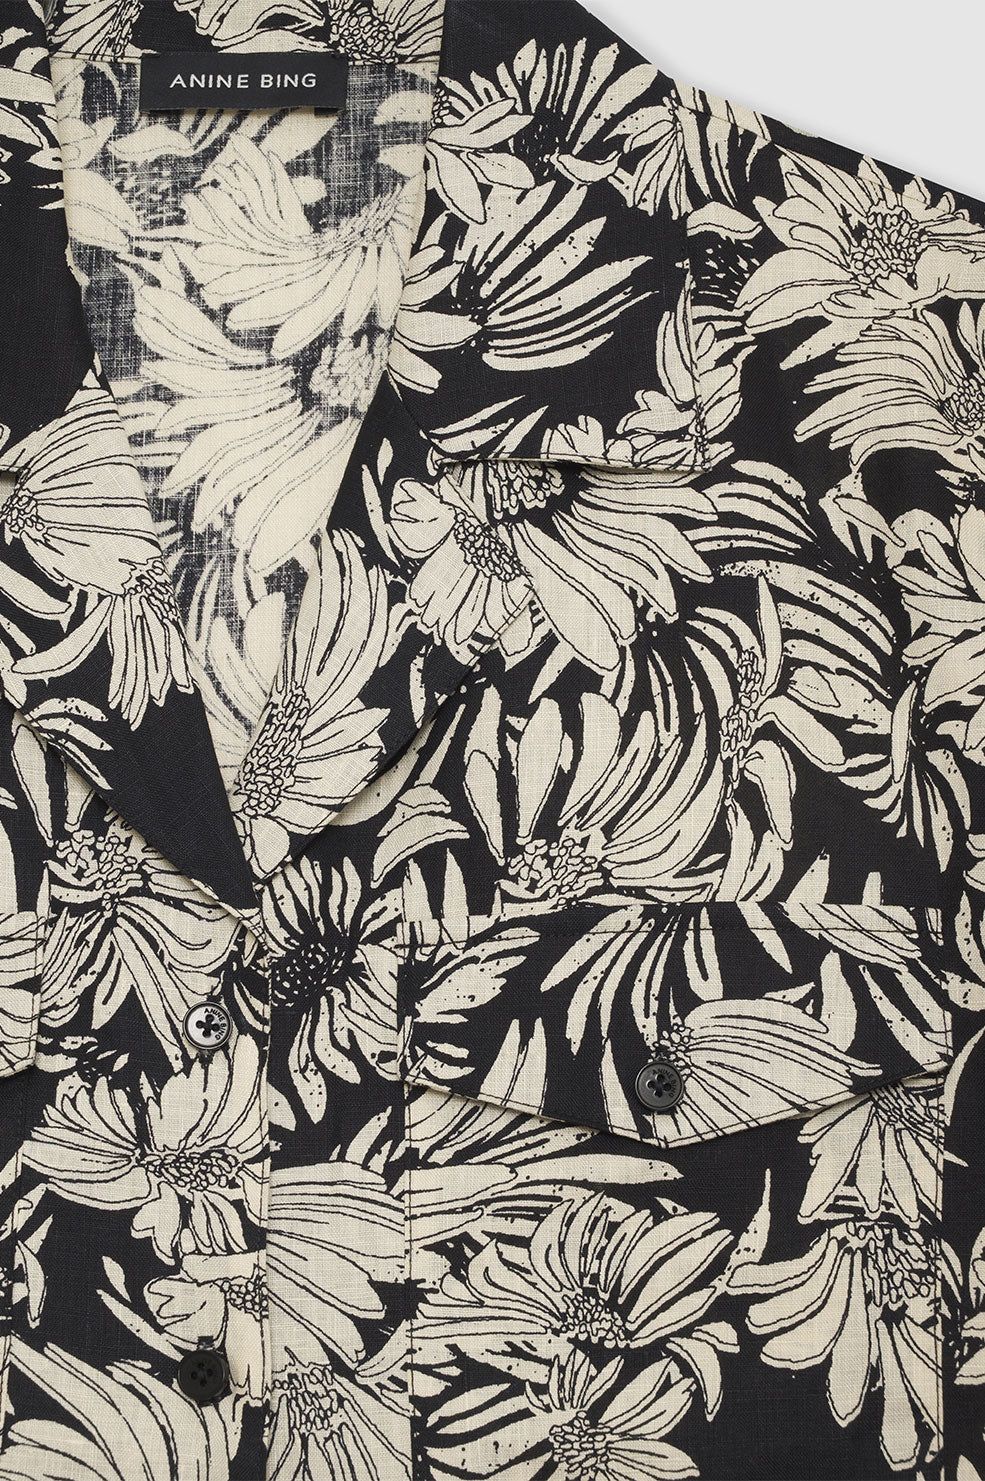 ANINE BING Hamilton Shirt - Black Floral Print - Detail View